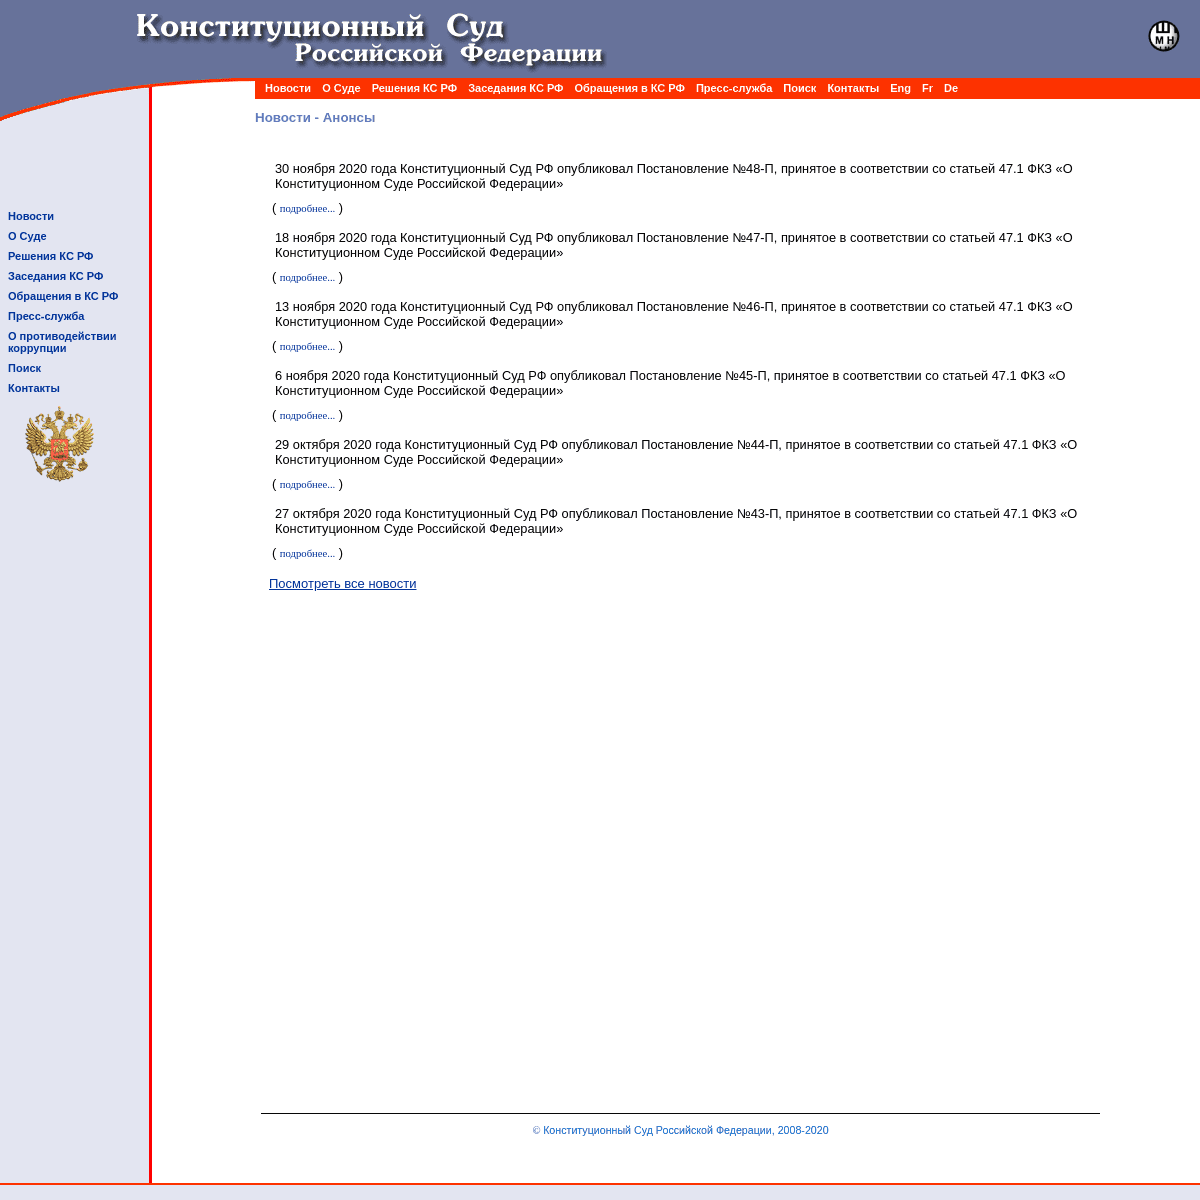 A complete backup of ksrf.ru